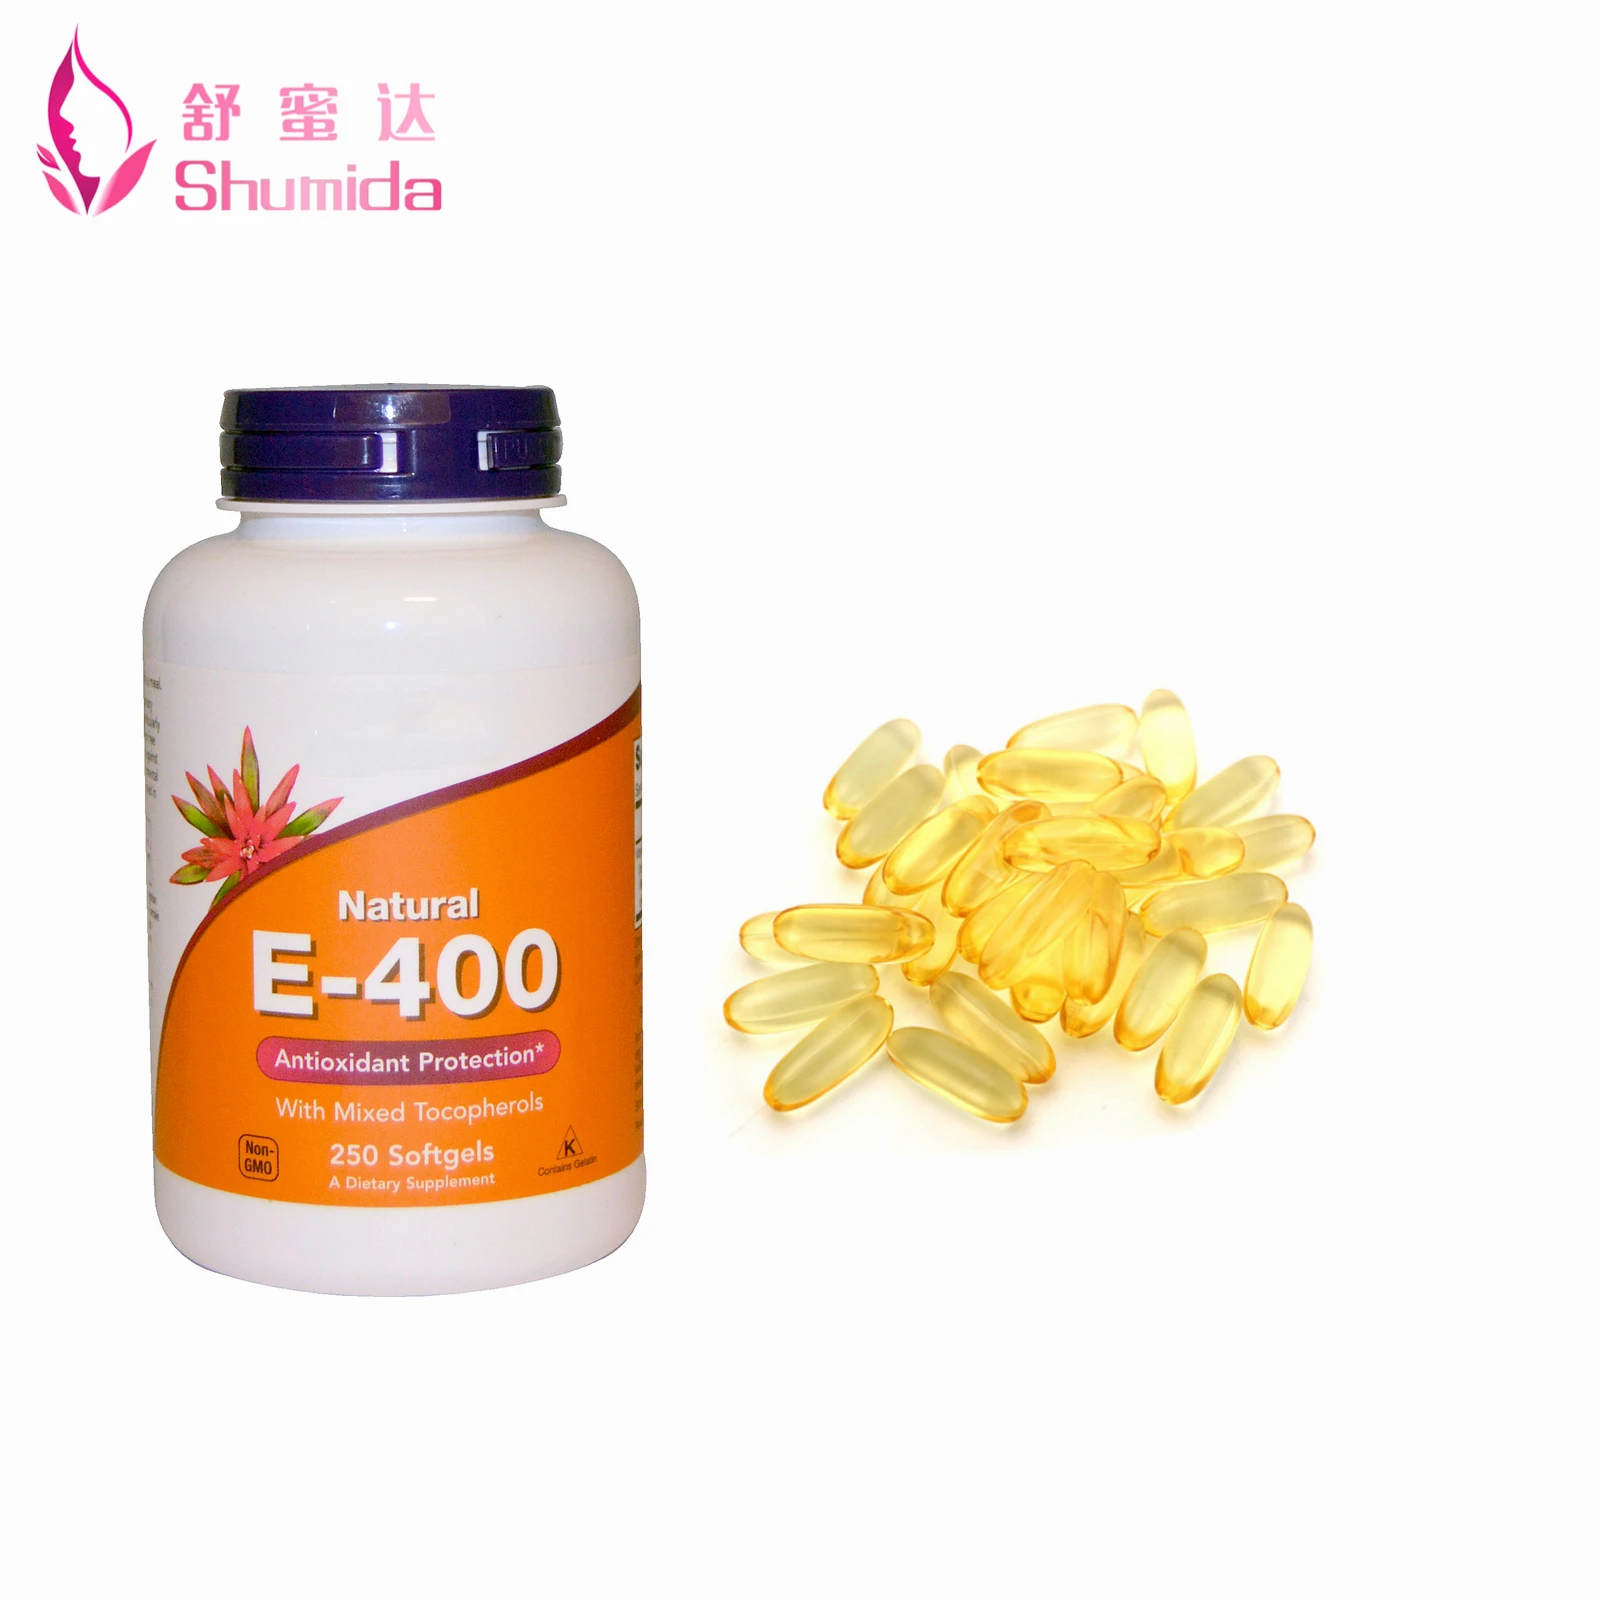 500 Mg Natural Health Supplement Food Vitamin E Capsules For Whitening Black Skin Buy Vitamin E Natural Health Supplement Food Skin Whitening For Black Skin Product On Alibaba Com